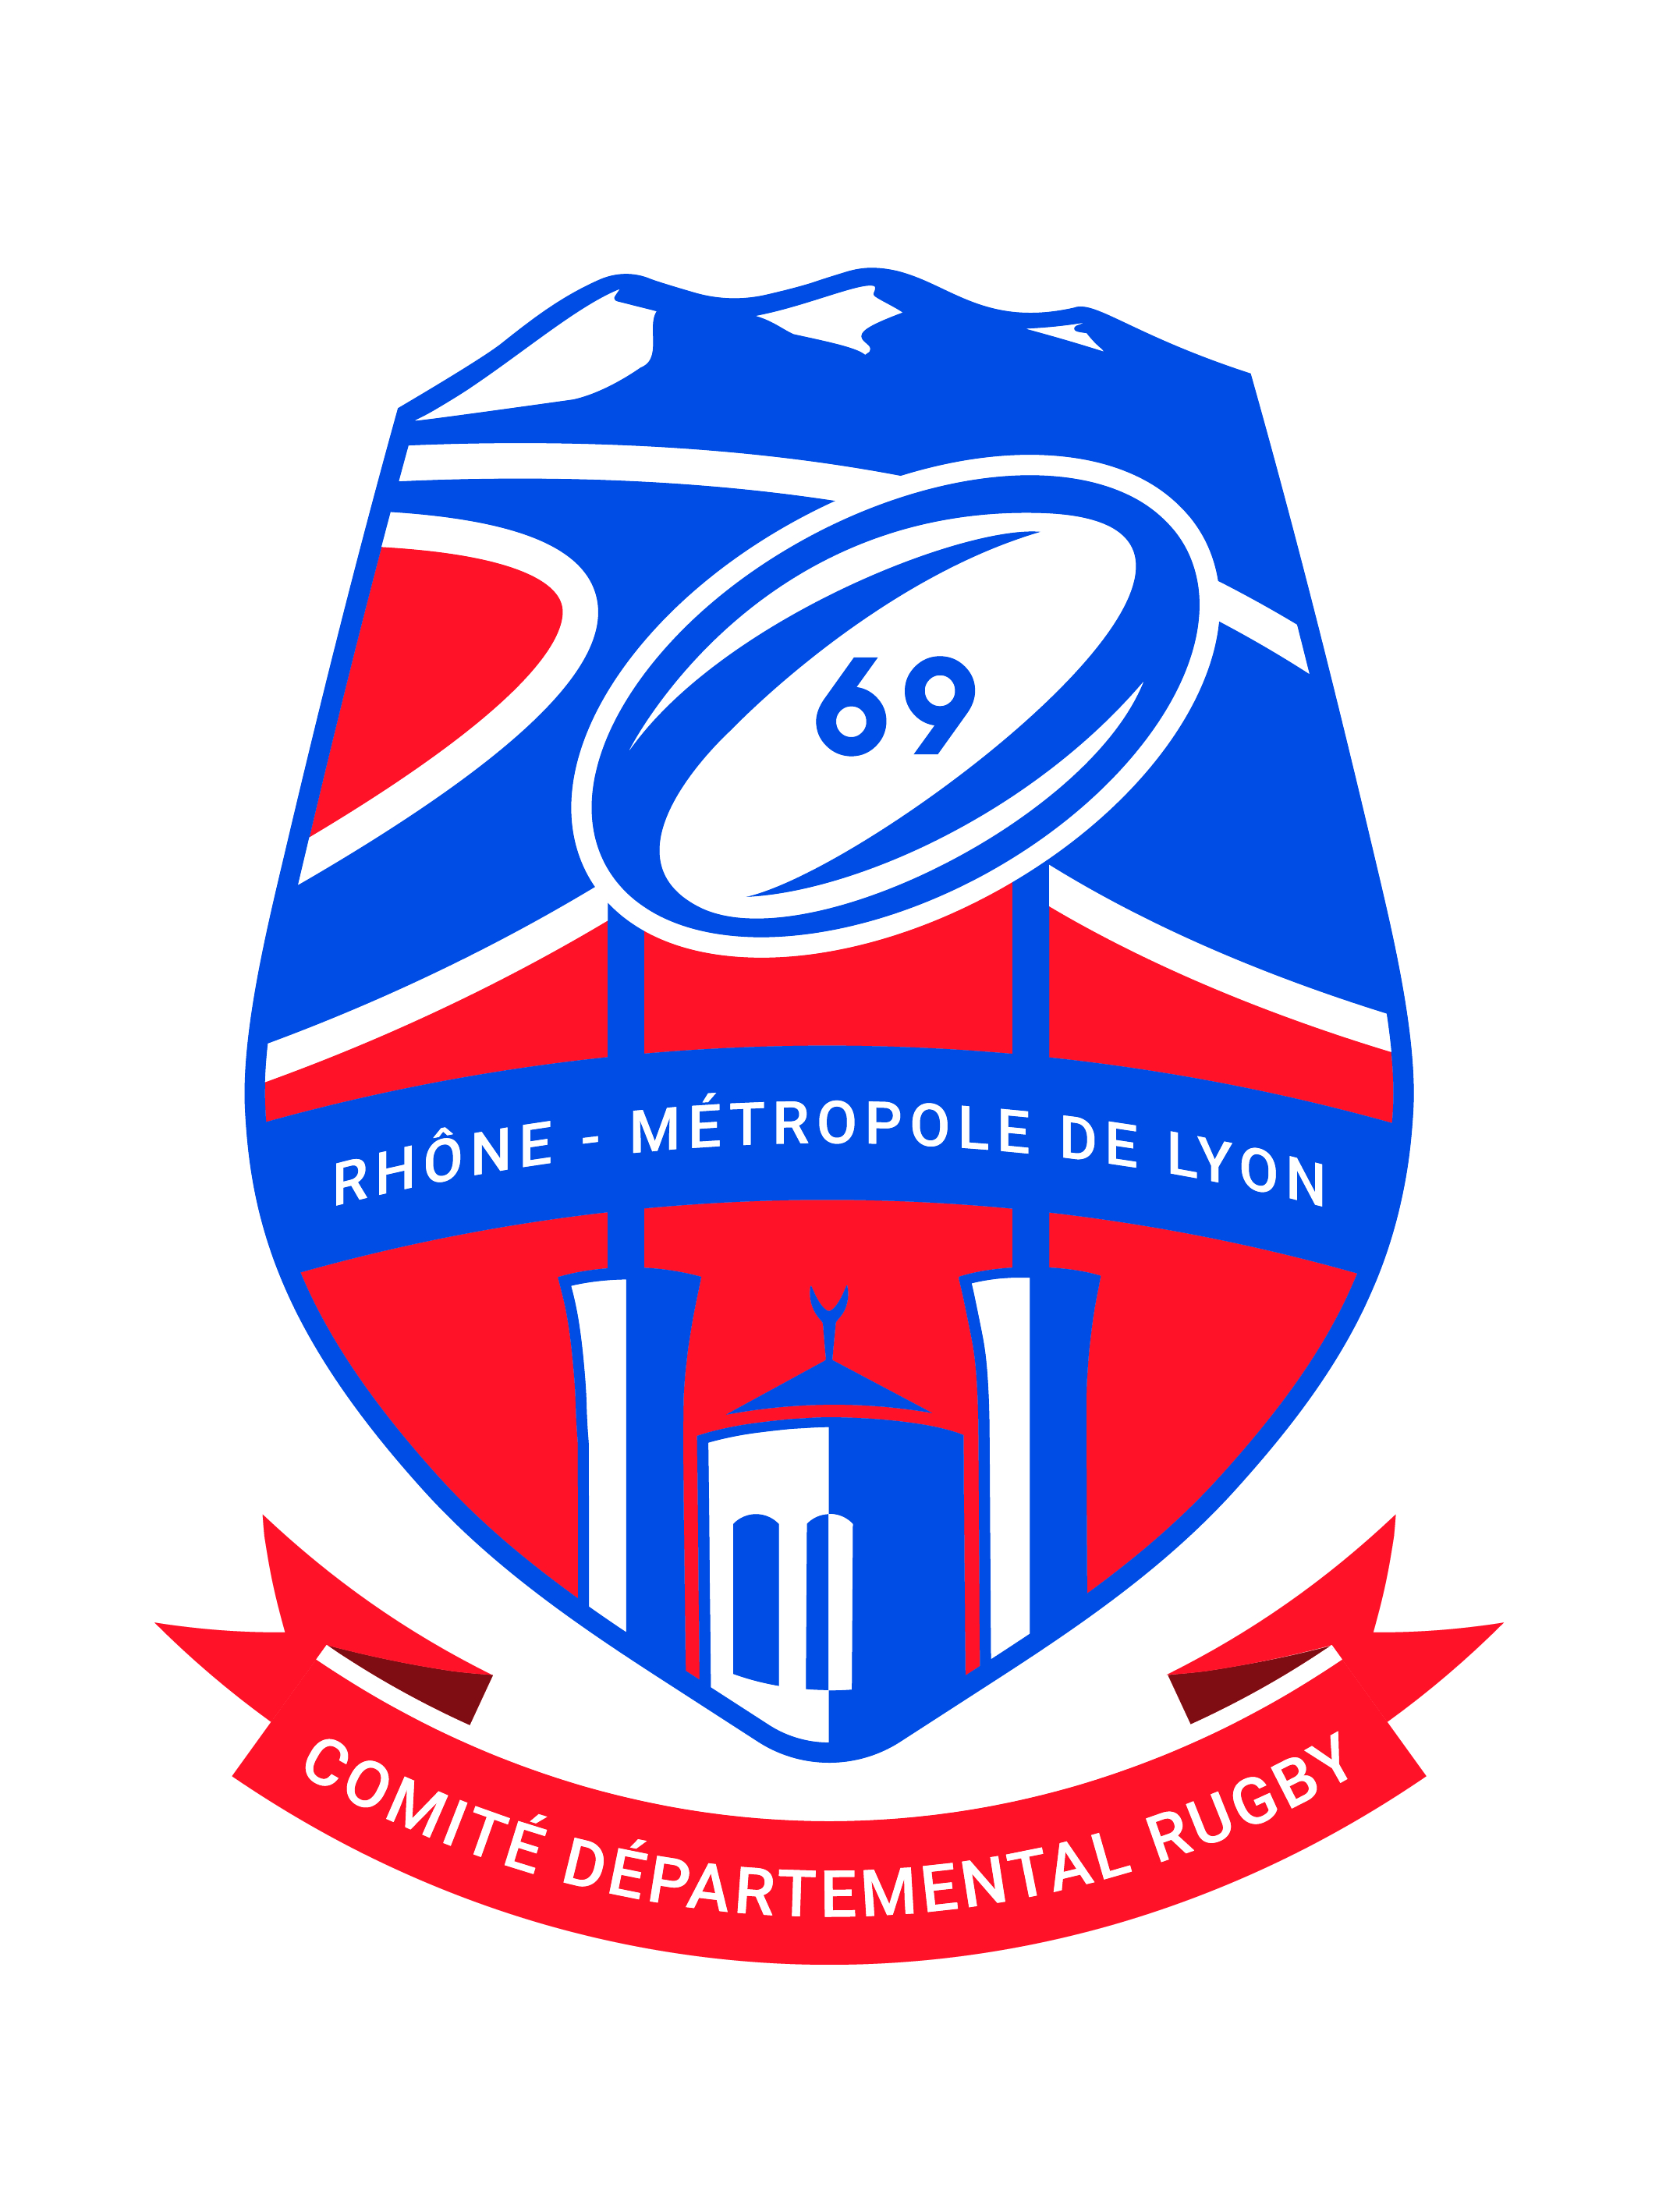 codep-de-rugby-du-rhone-metropole-de-lyon-logo-6213543a2faa9649514864.jpg